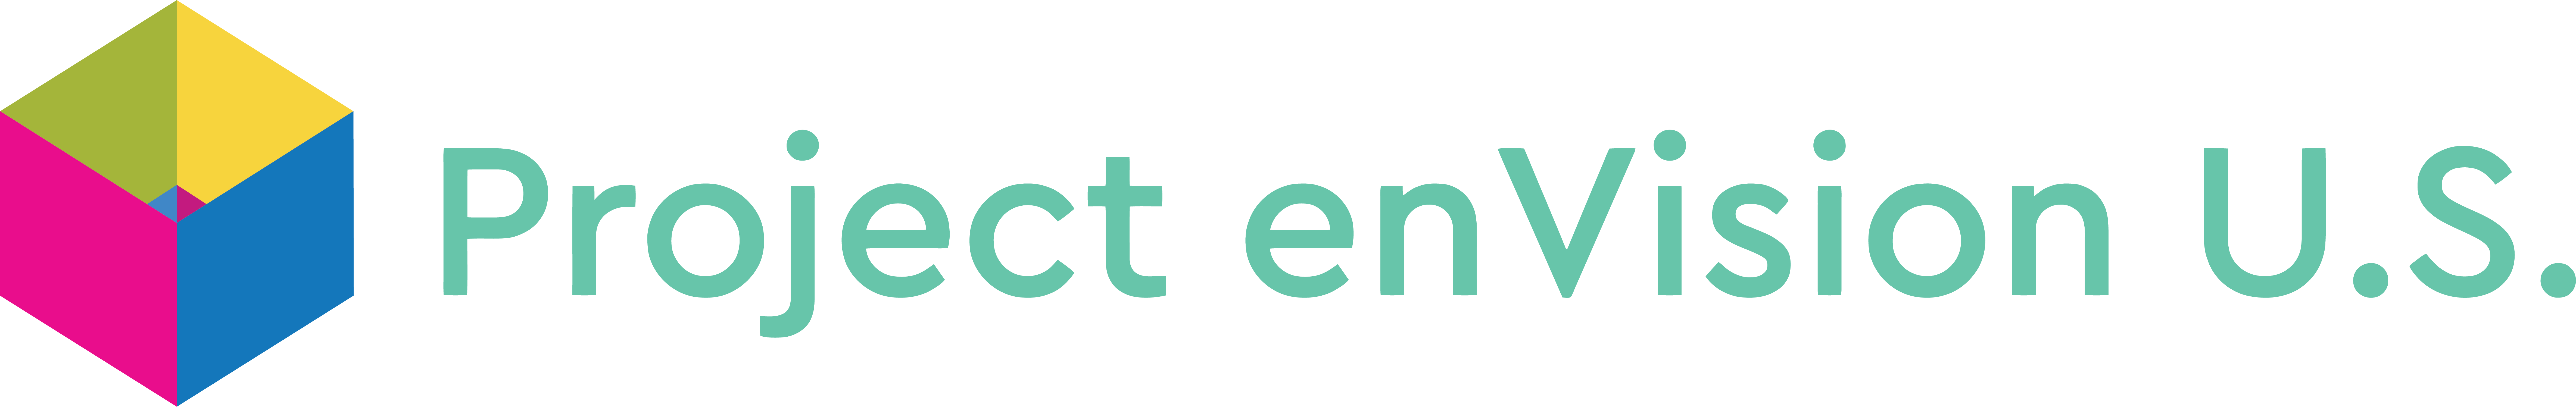 Project enVision U.S. logo